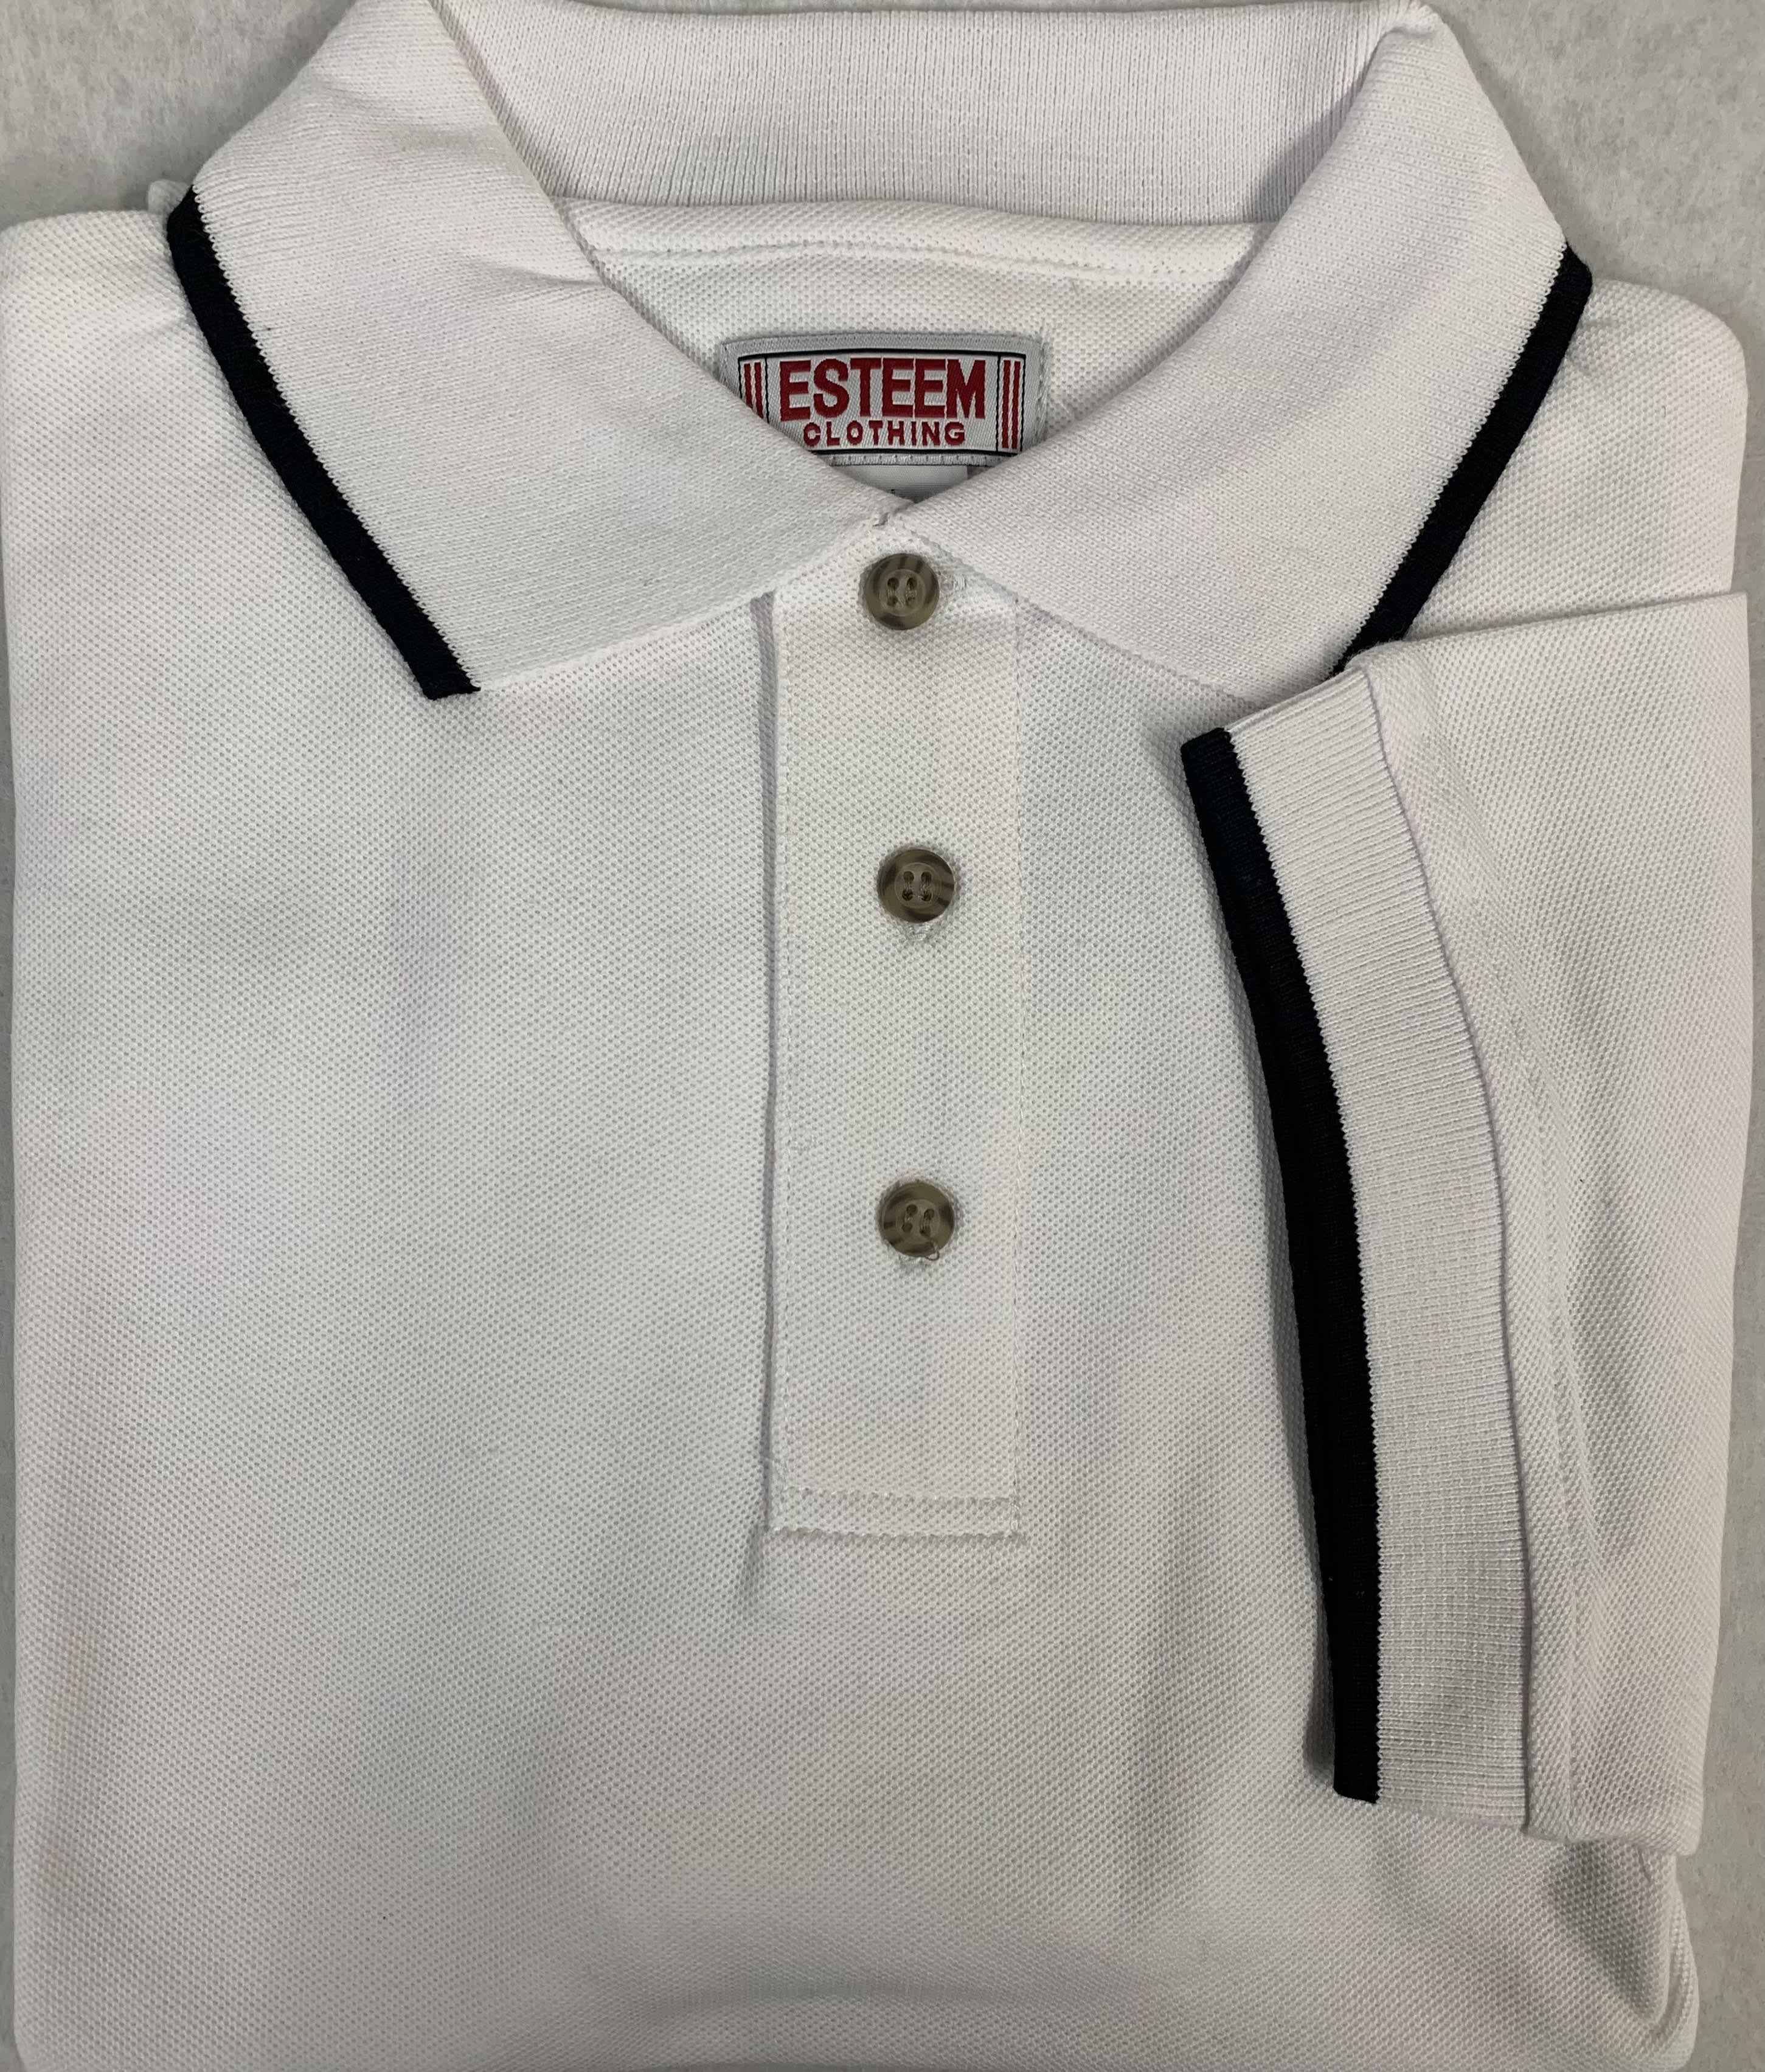 Short Sleeve Contrast collar/cuff pique golf shirt - white color